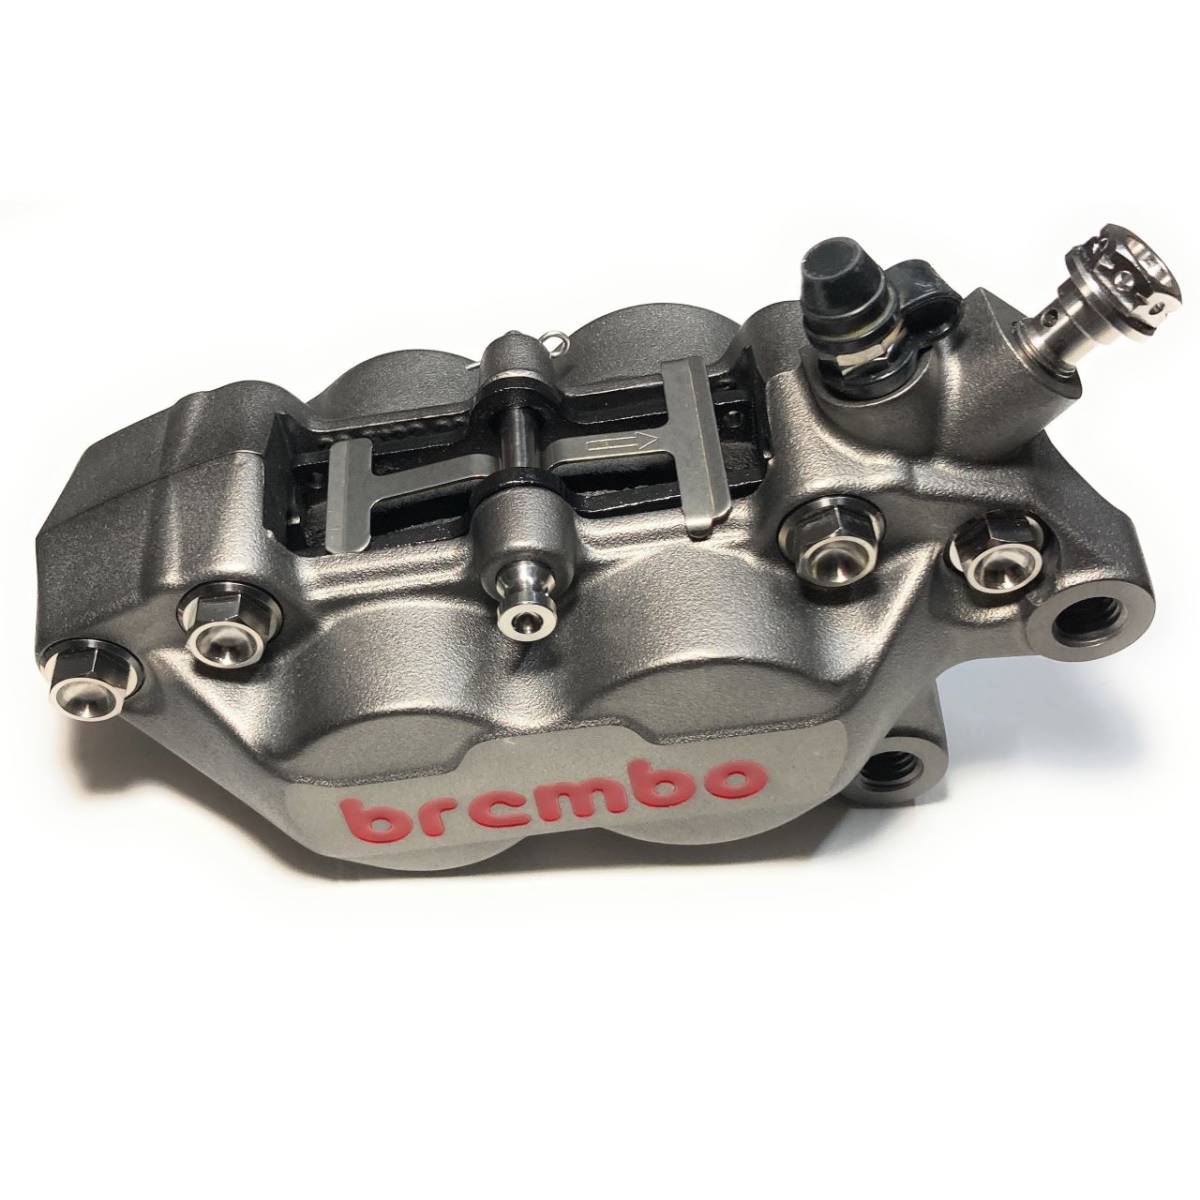  2 ps 64 titanium brake pad pin Brembo Brembo 4 pot casting brake caliper new crab XJR400 Zephyr 400 Glo m Monkey 